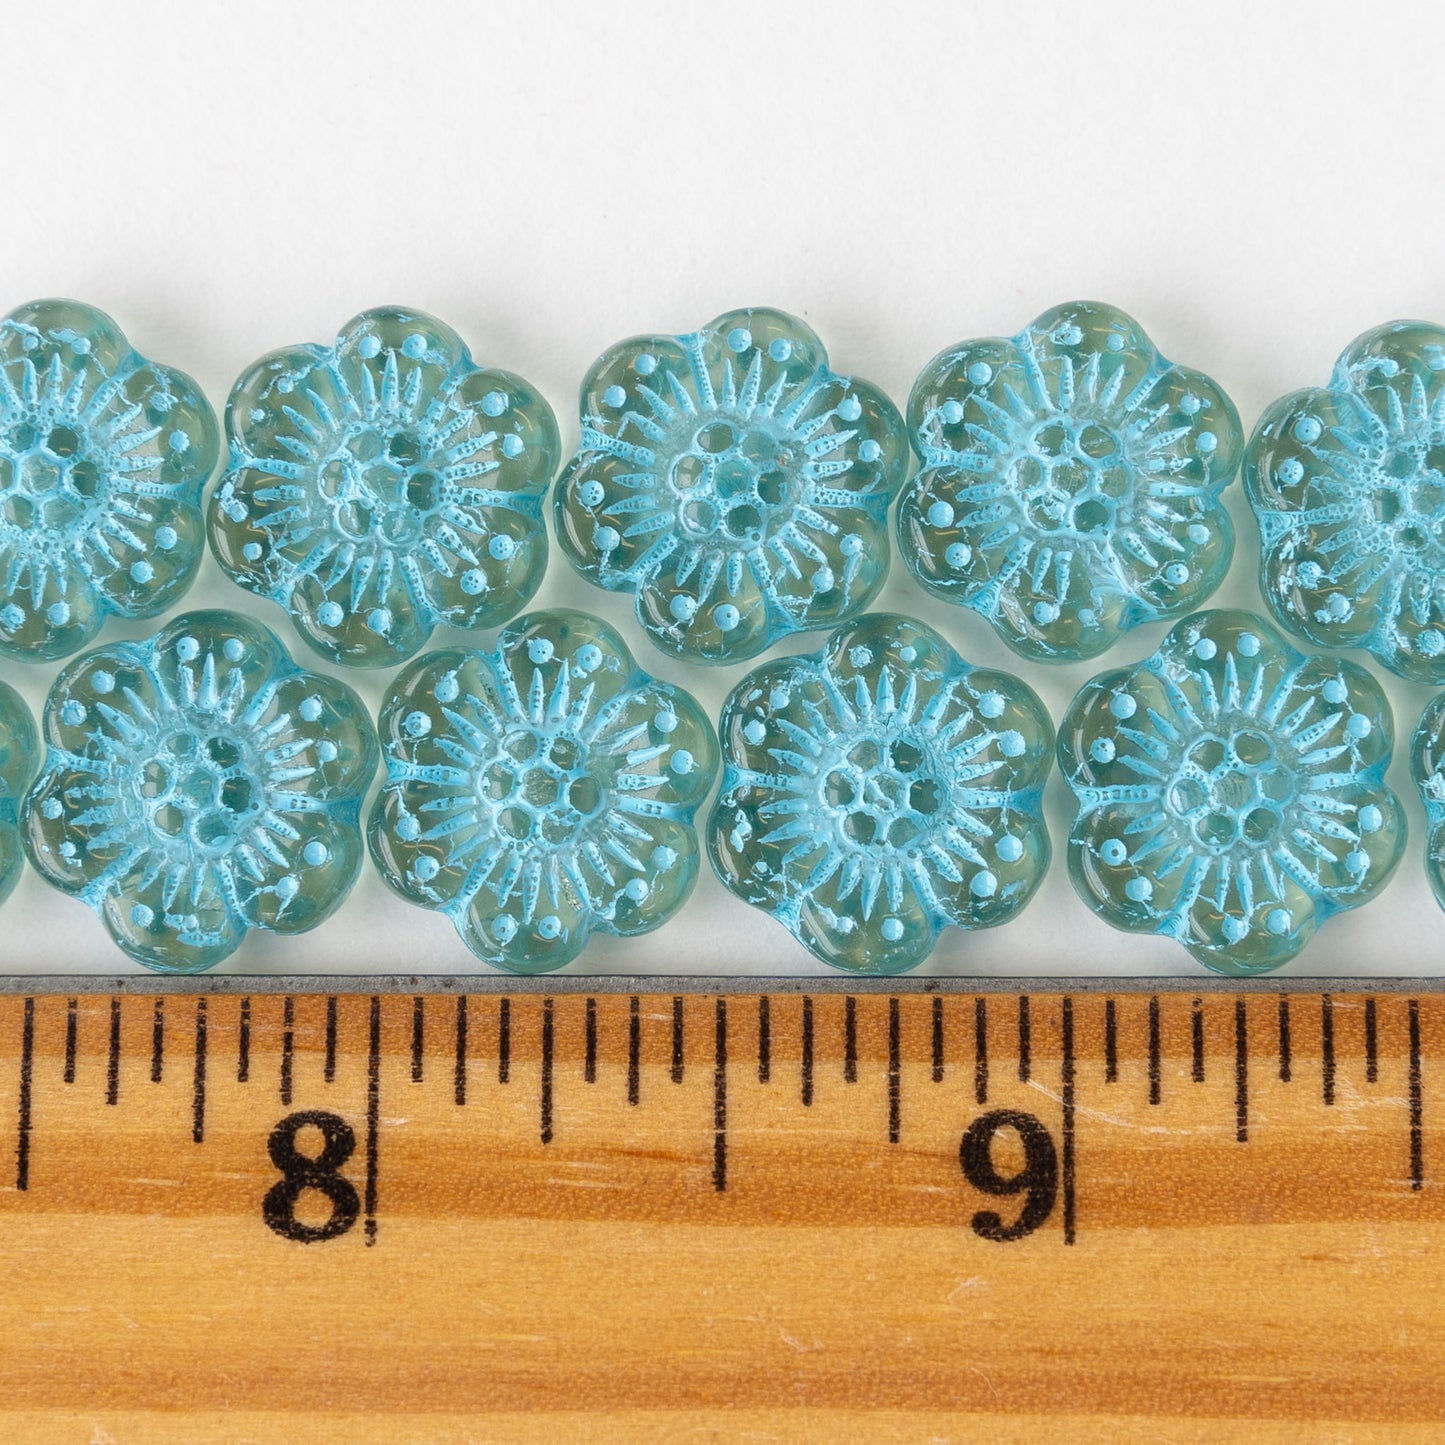 14mm Anemone Flower Beads -  Seafoam with Aqua Wash - 12 Beads